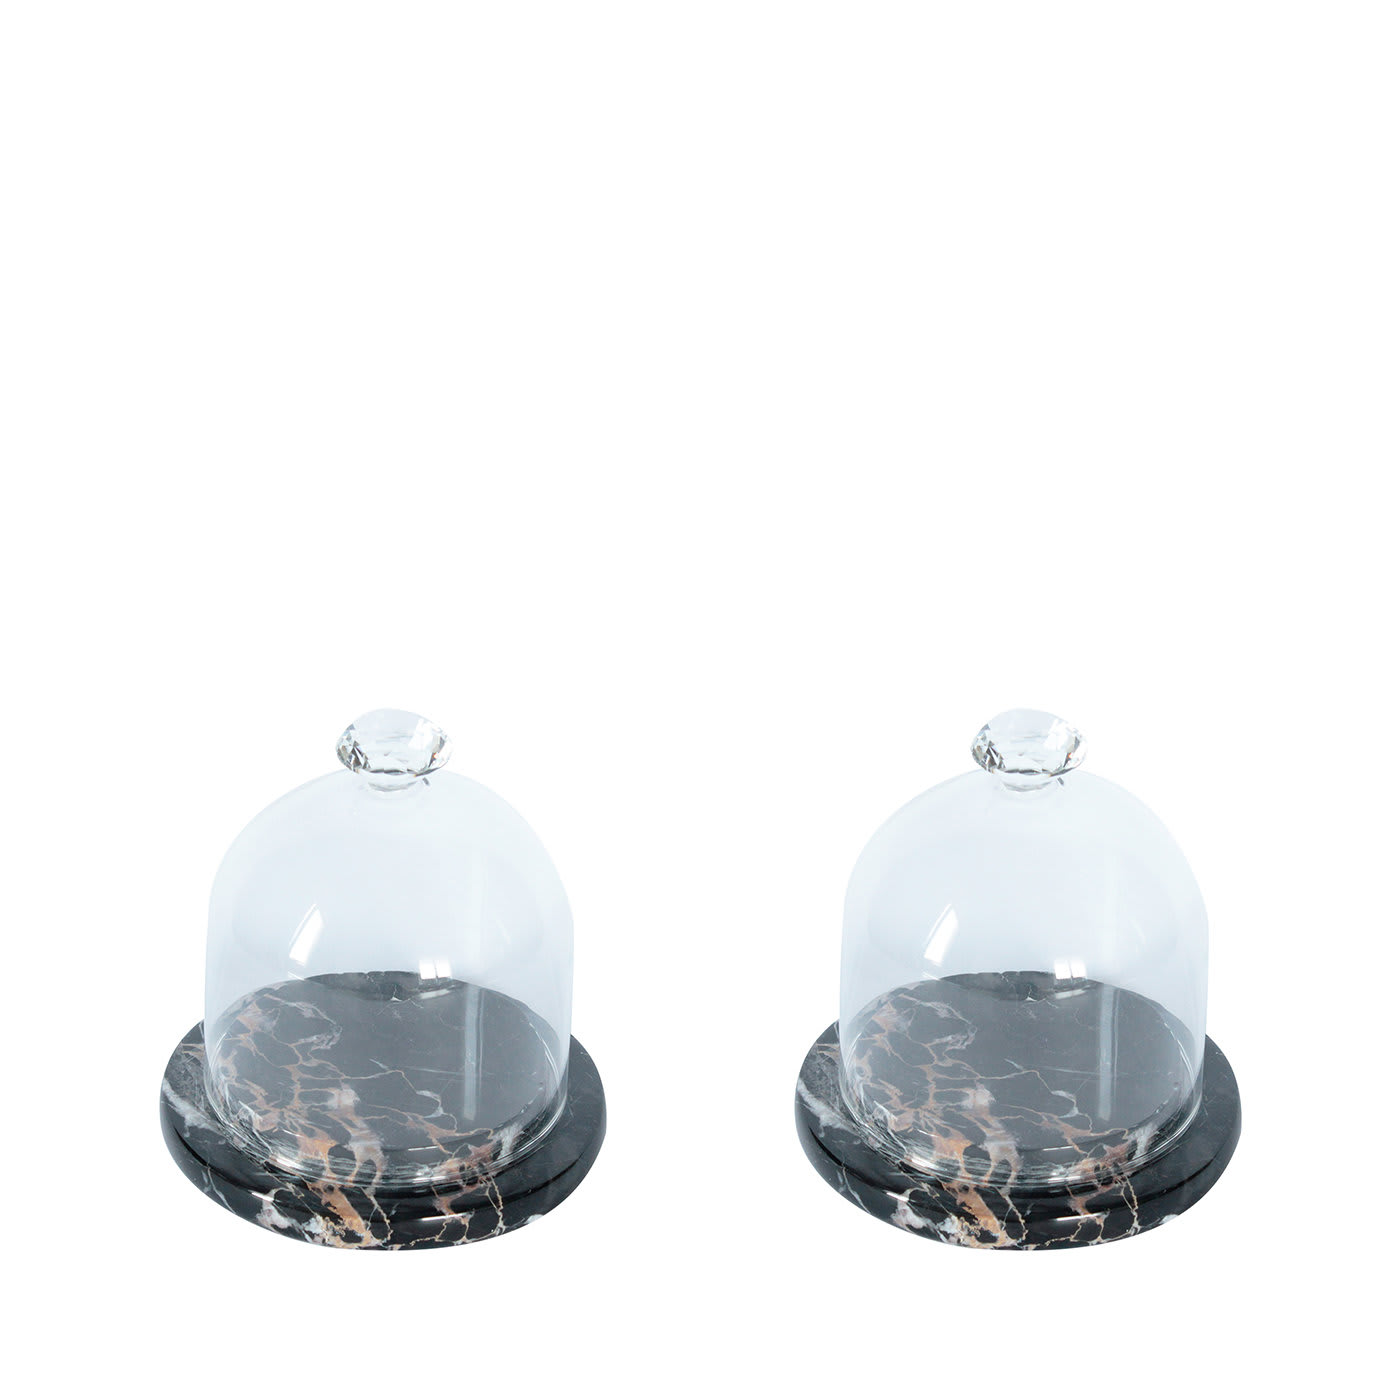 Set of 2 Cupolina Portoro Marble Trays with Glass Dome by Paola Giubbani - Carrara Home Design